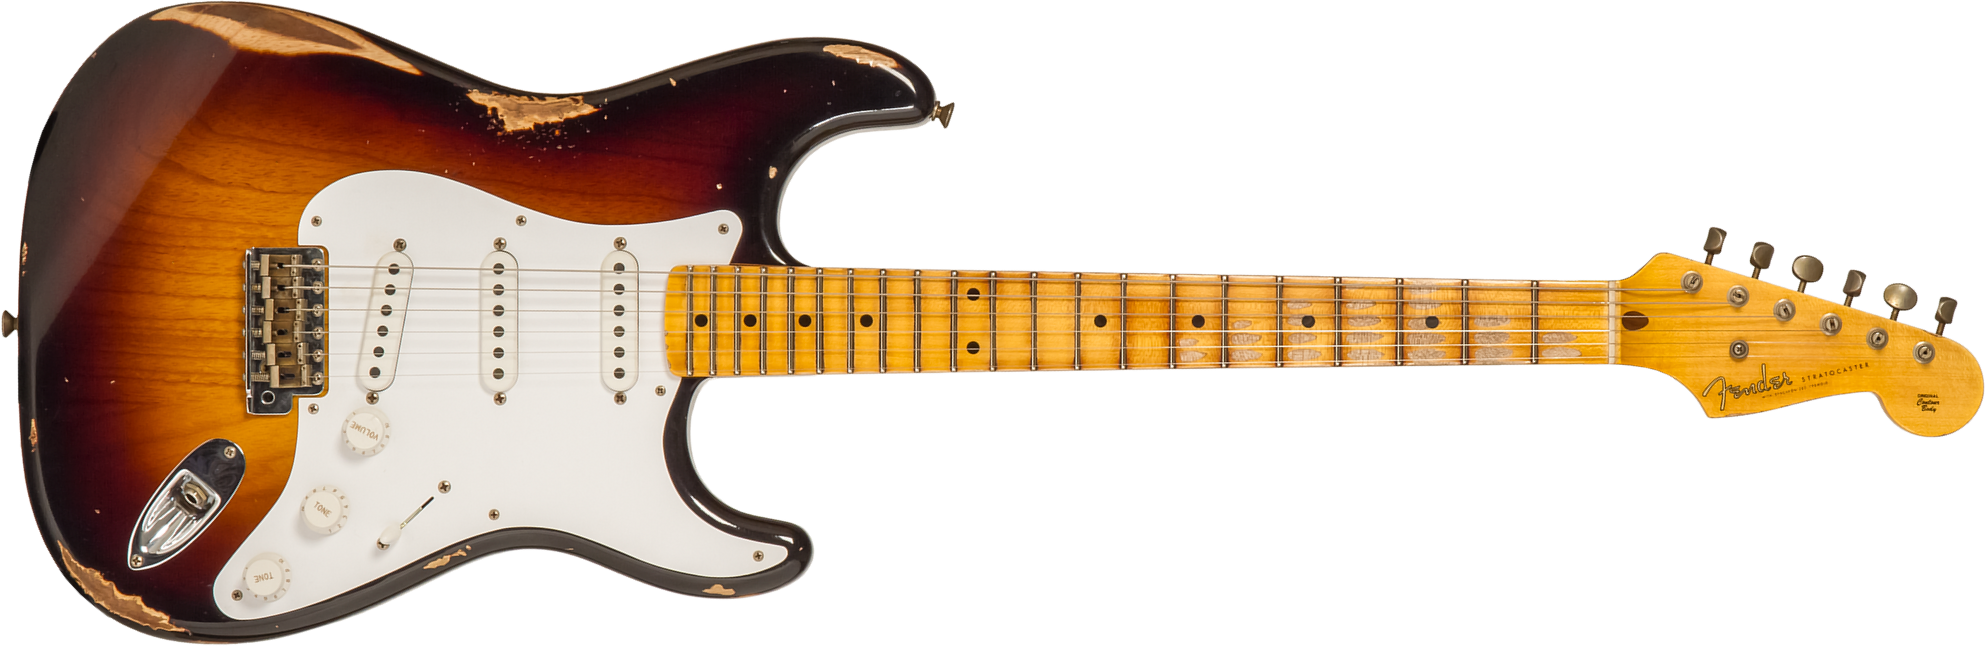 Fender Custom Shop Strat 1954 70th Anniv. 3s Trem Mn #xn4316 - Relic Wide Fade 2-color Sunburst - Guitarra eléctrica con forma de str. - Main picture